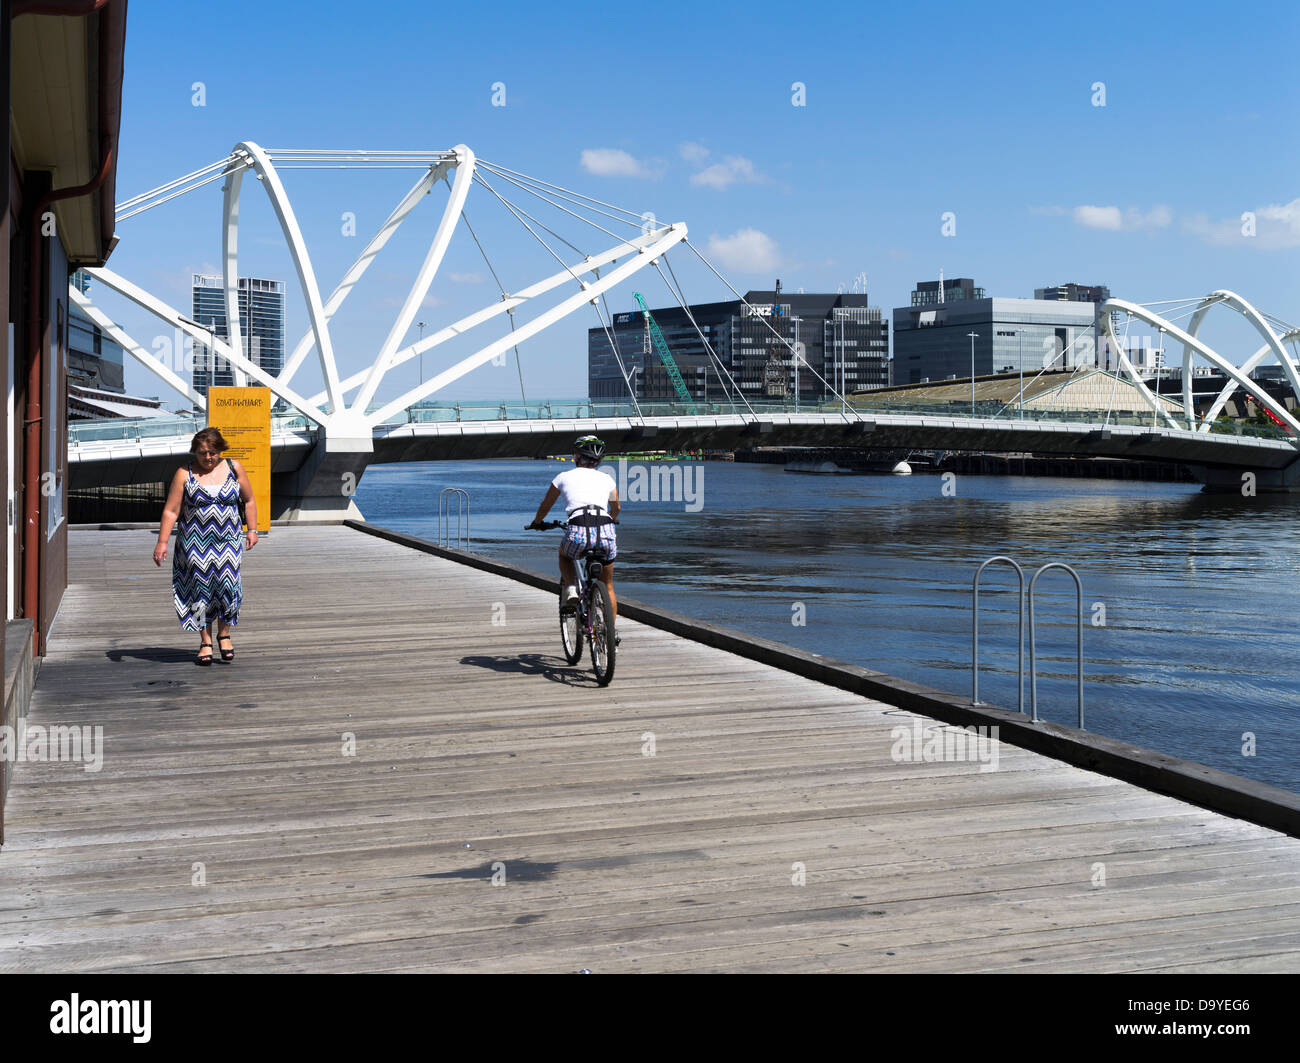 dh Yarra River Promenade MELBOURNE AUSTRALIEN Bootsbauer Hof Radfahrer Seeleute Brücke Fahrrad fahren Radfahren in Stockfoto